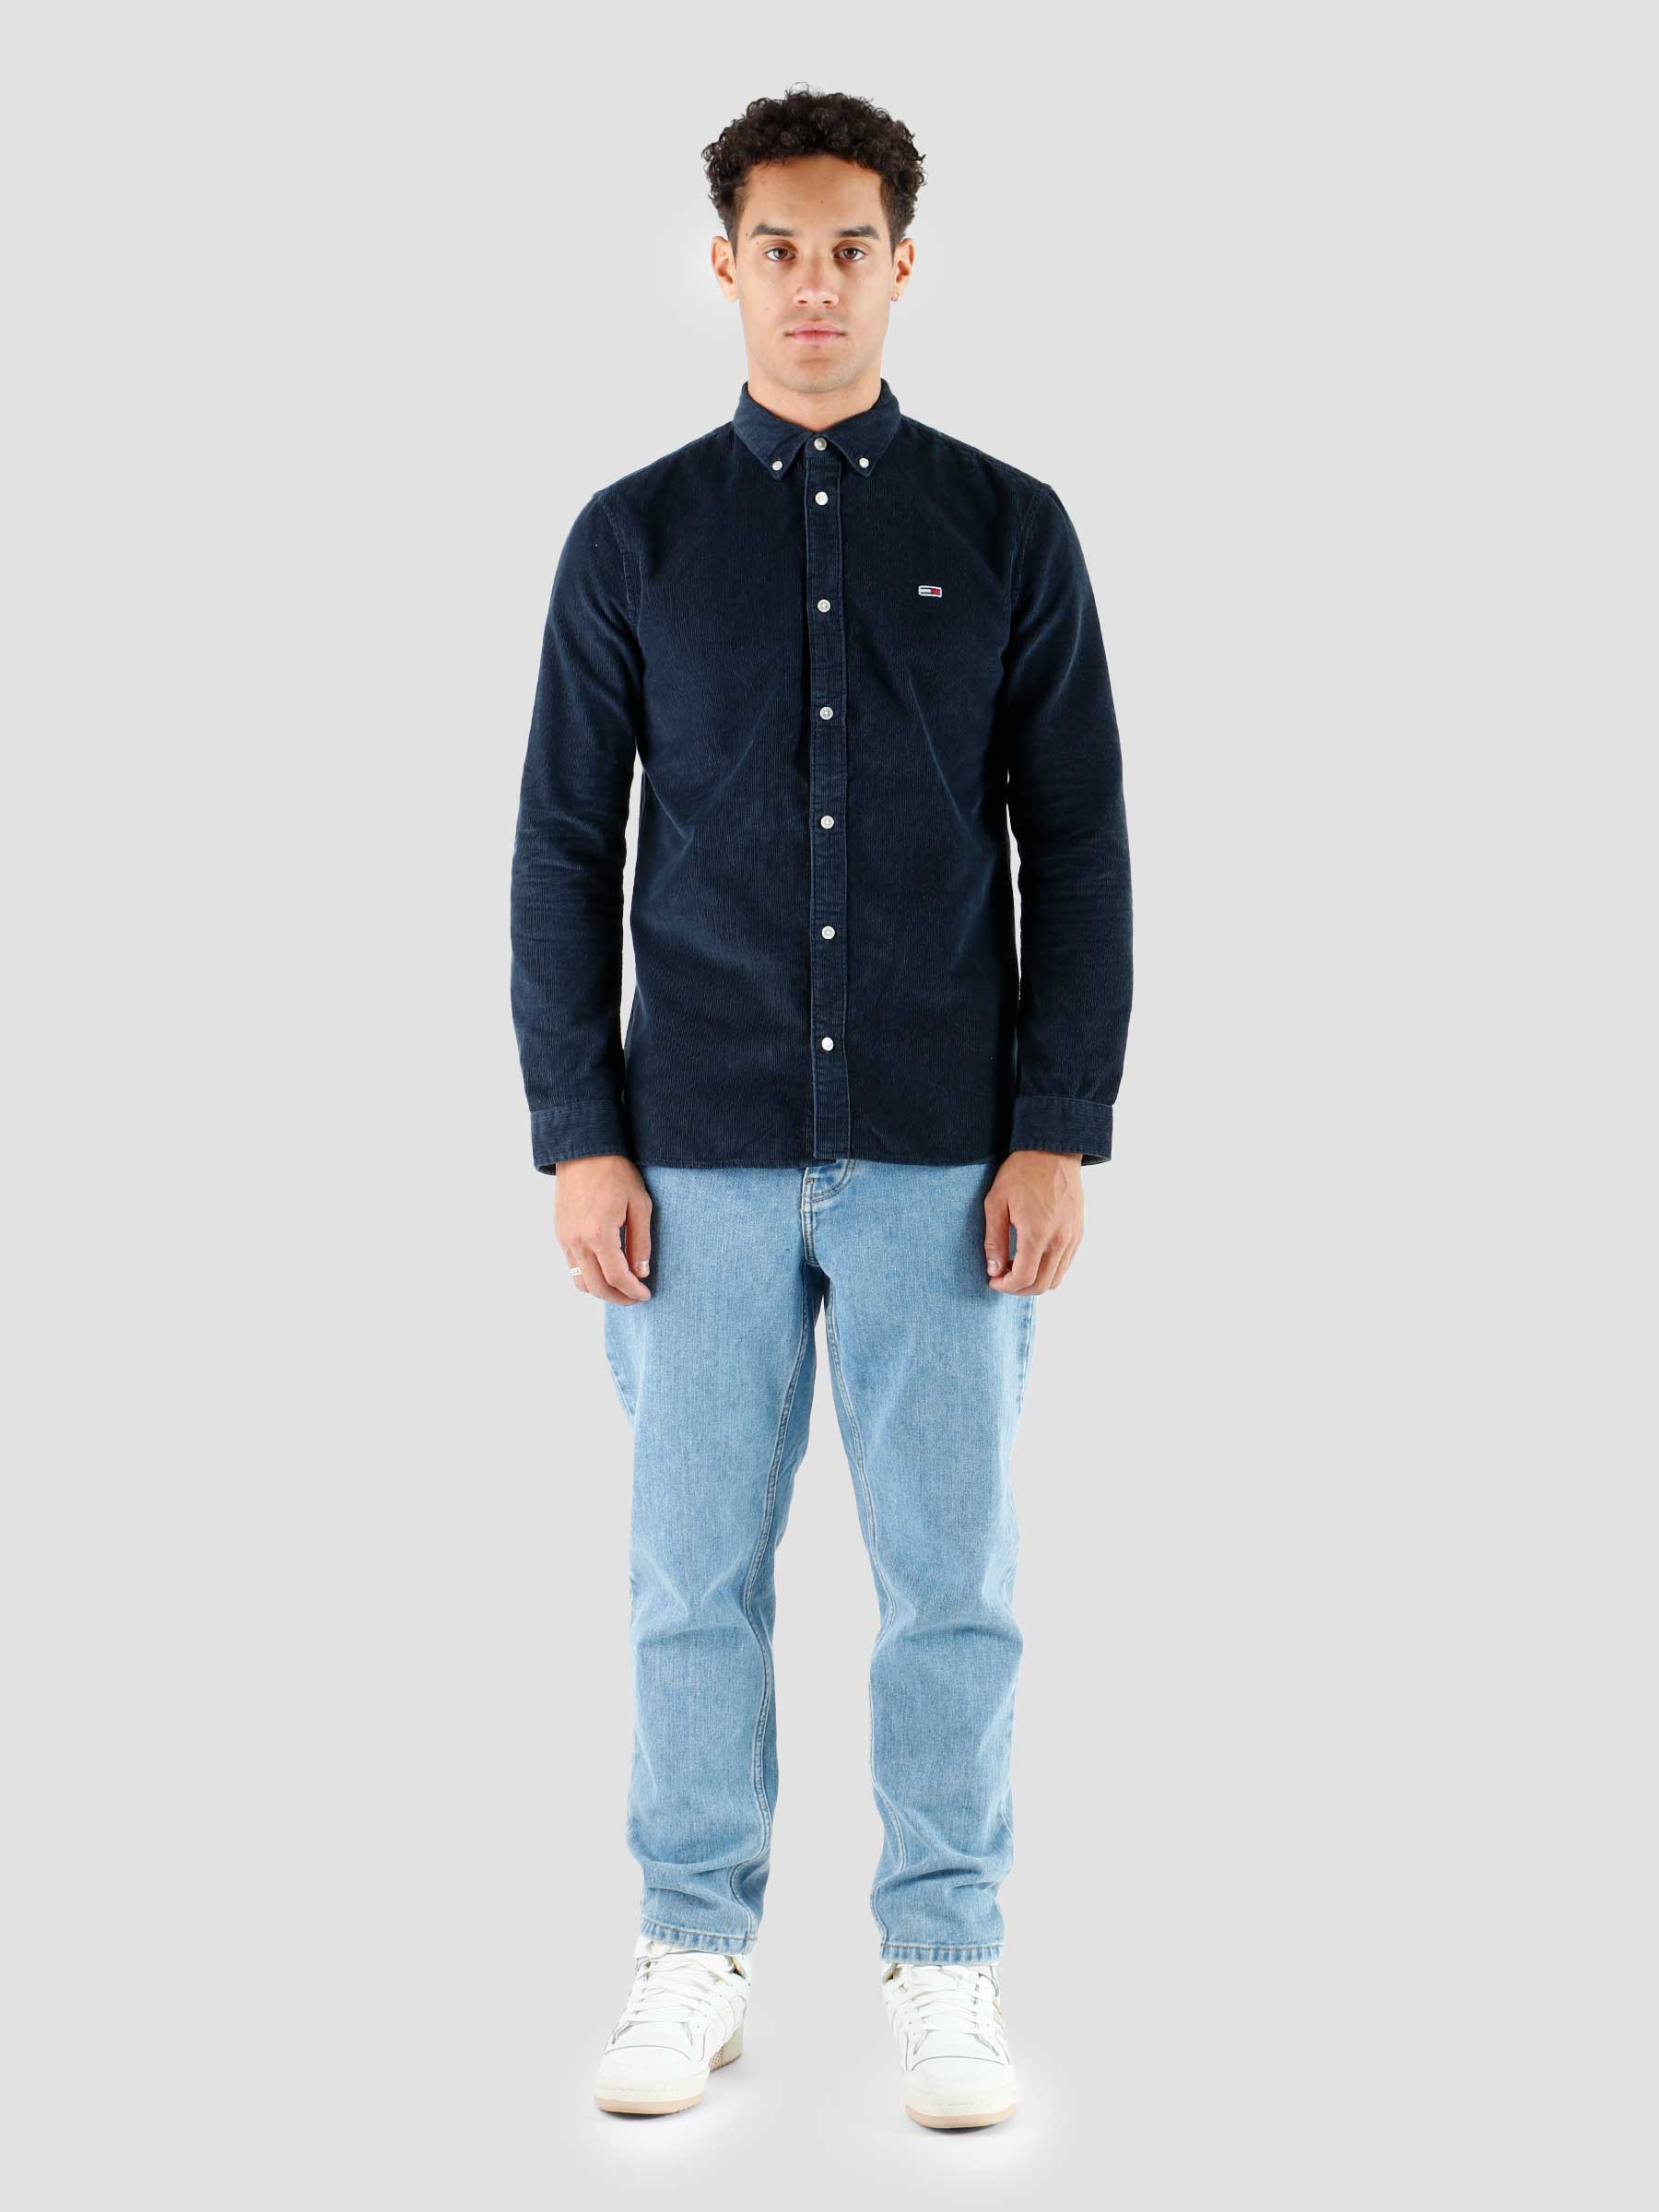 - Twilight Jeans Solid Navy Cord Tommy Shirt Freshcotton TJM